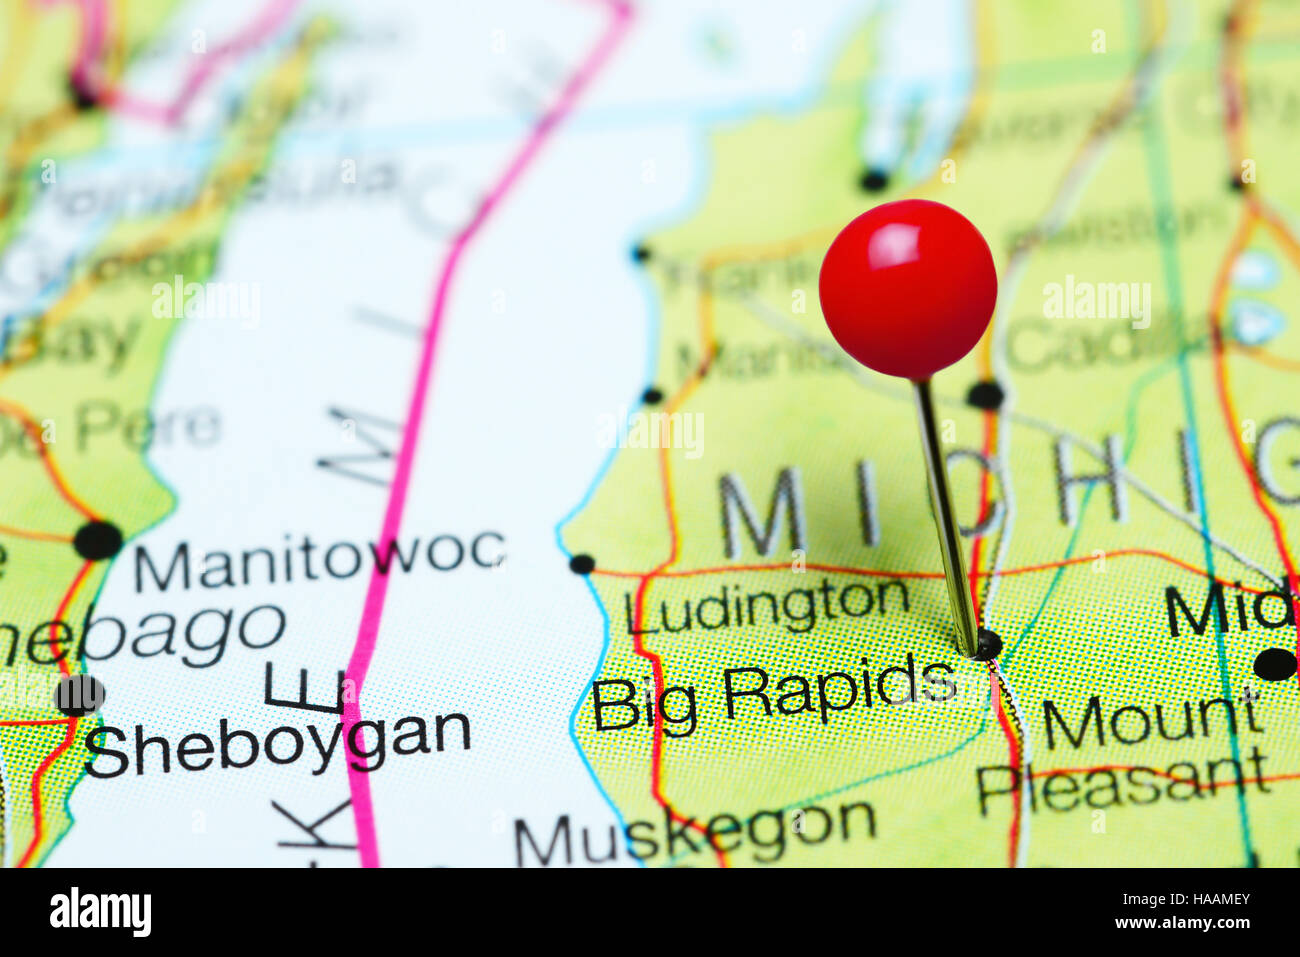 Big Rapids Pinned On A Map Of Michigan Usa HAAMEY 